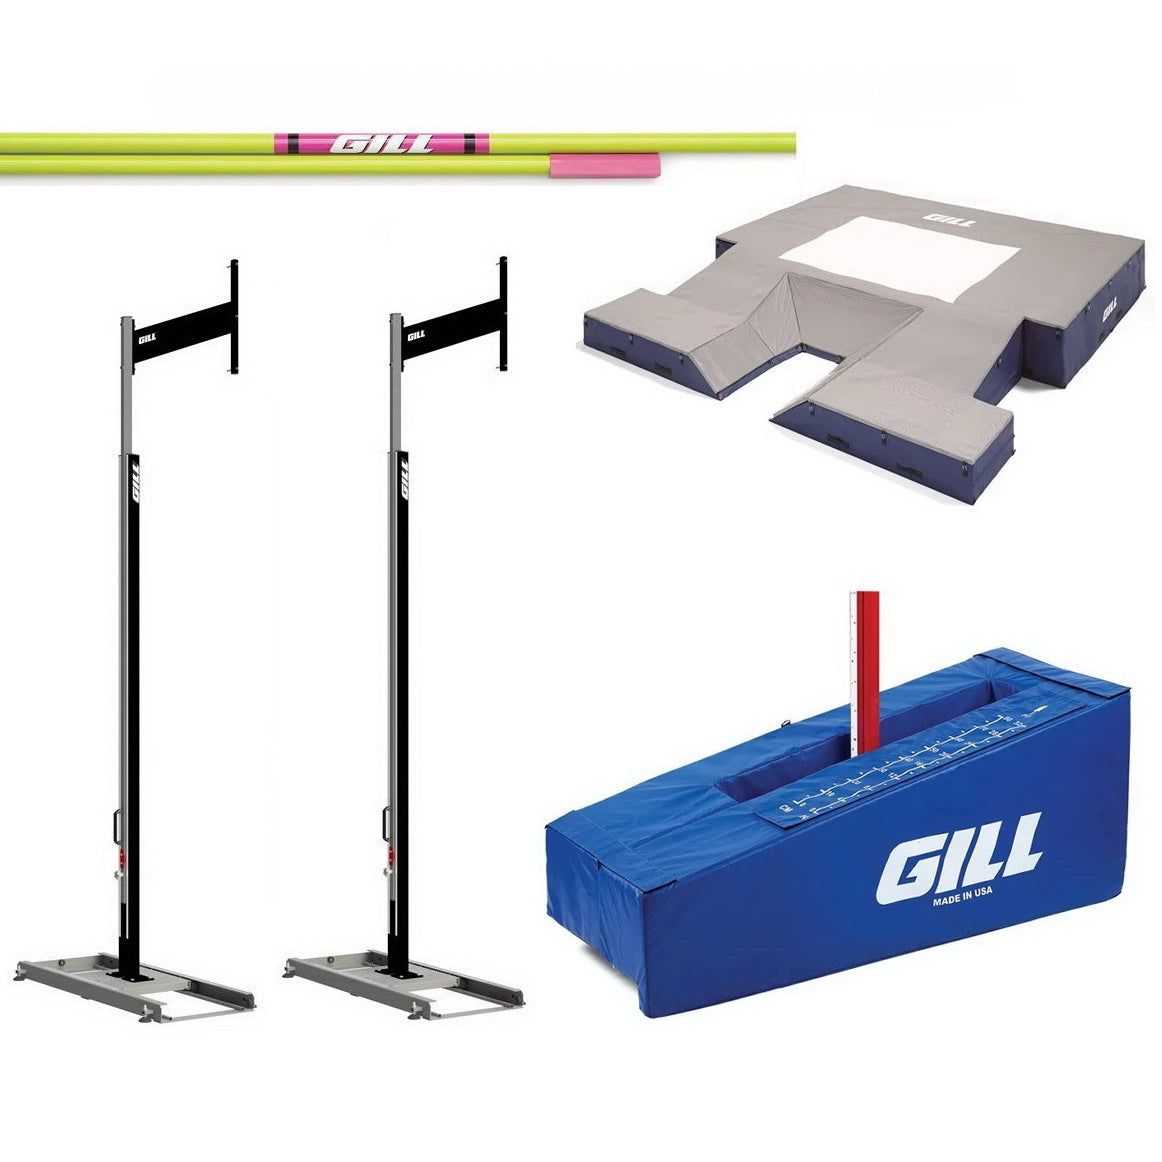 Gill G1 Pole Vault Pit Value Pack